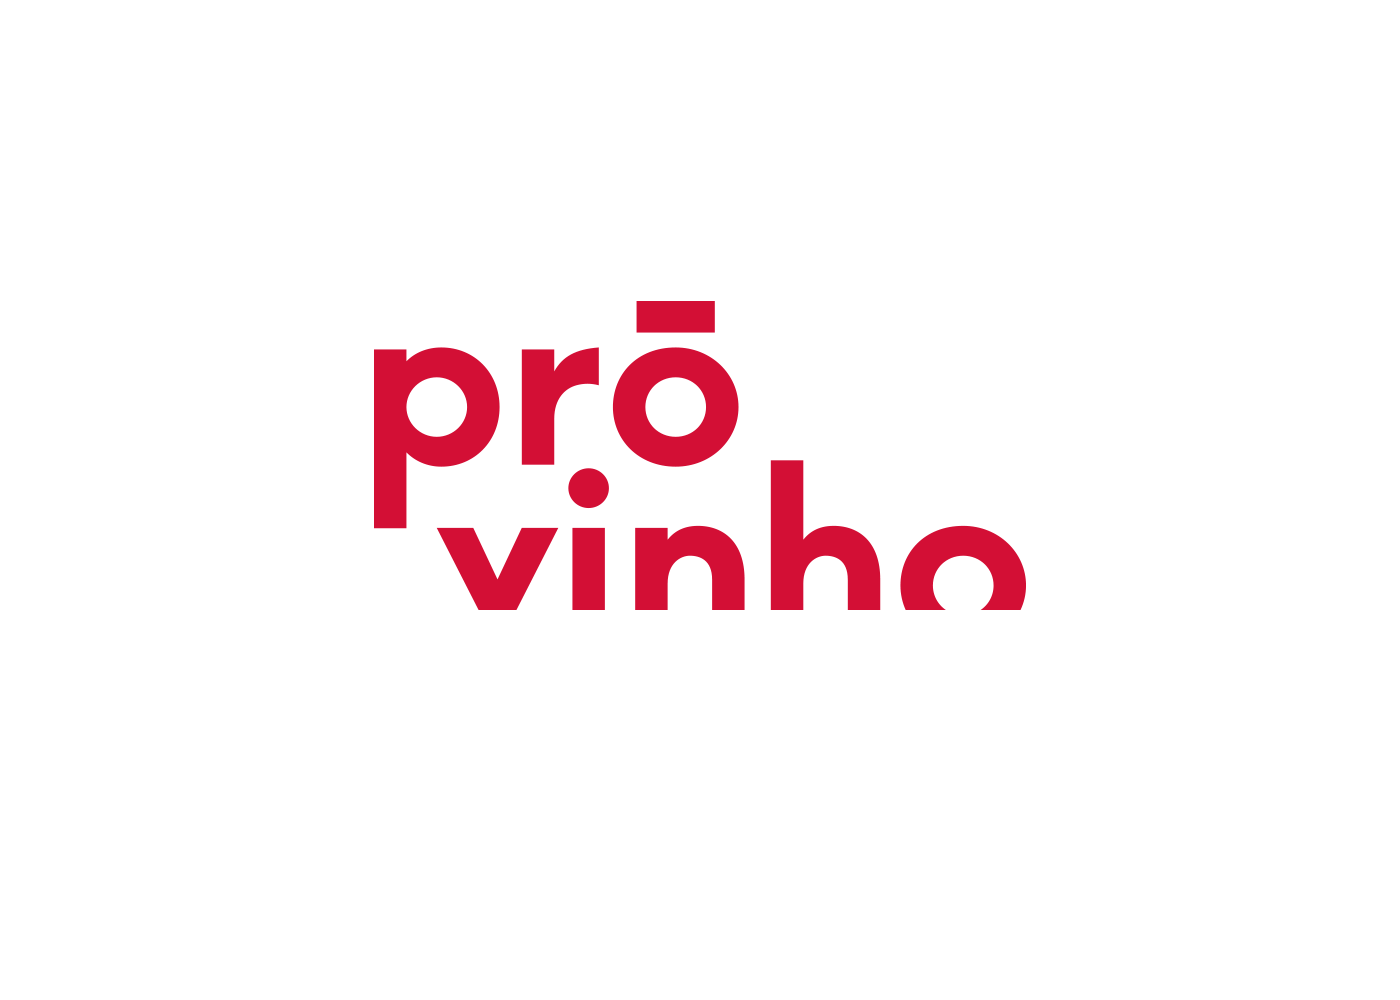 vinho wine IBRAVIN branding  Fashion  logo logos Minimalism Logotype brand